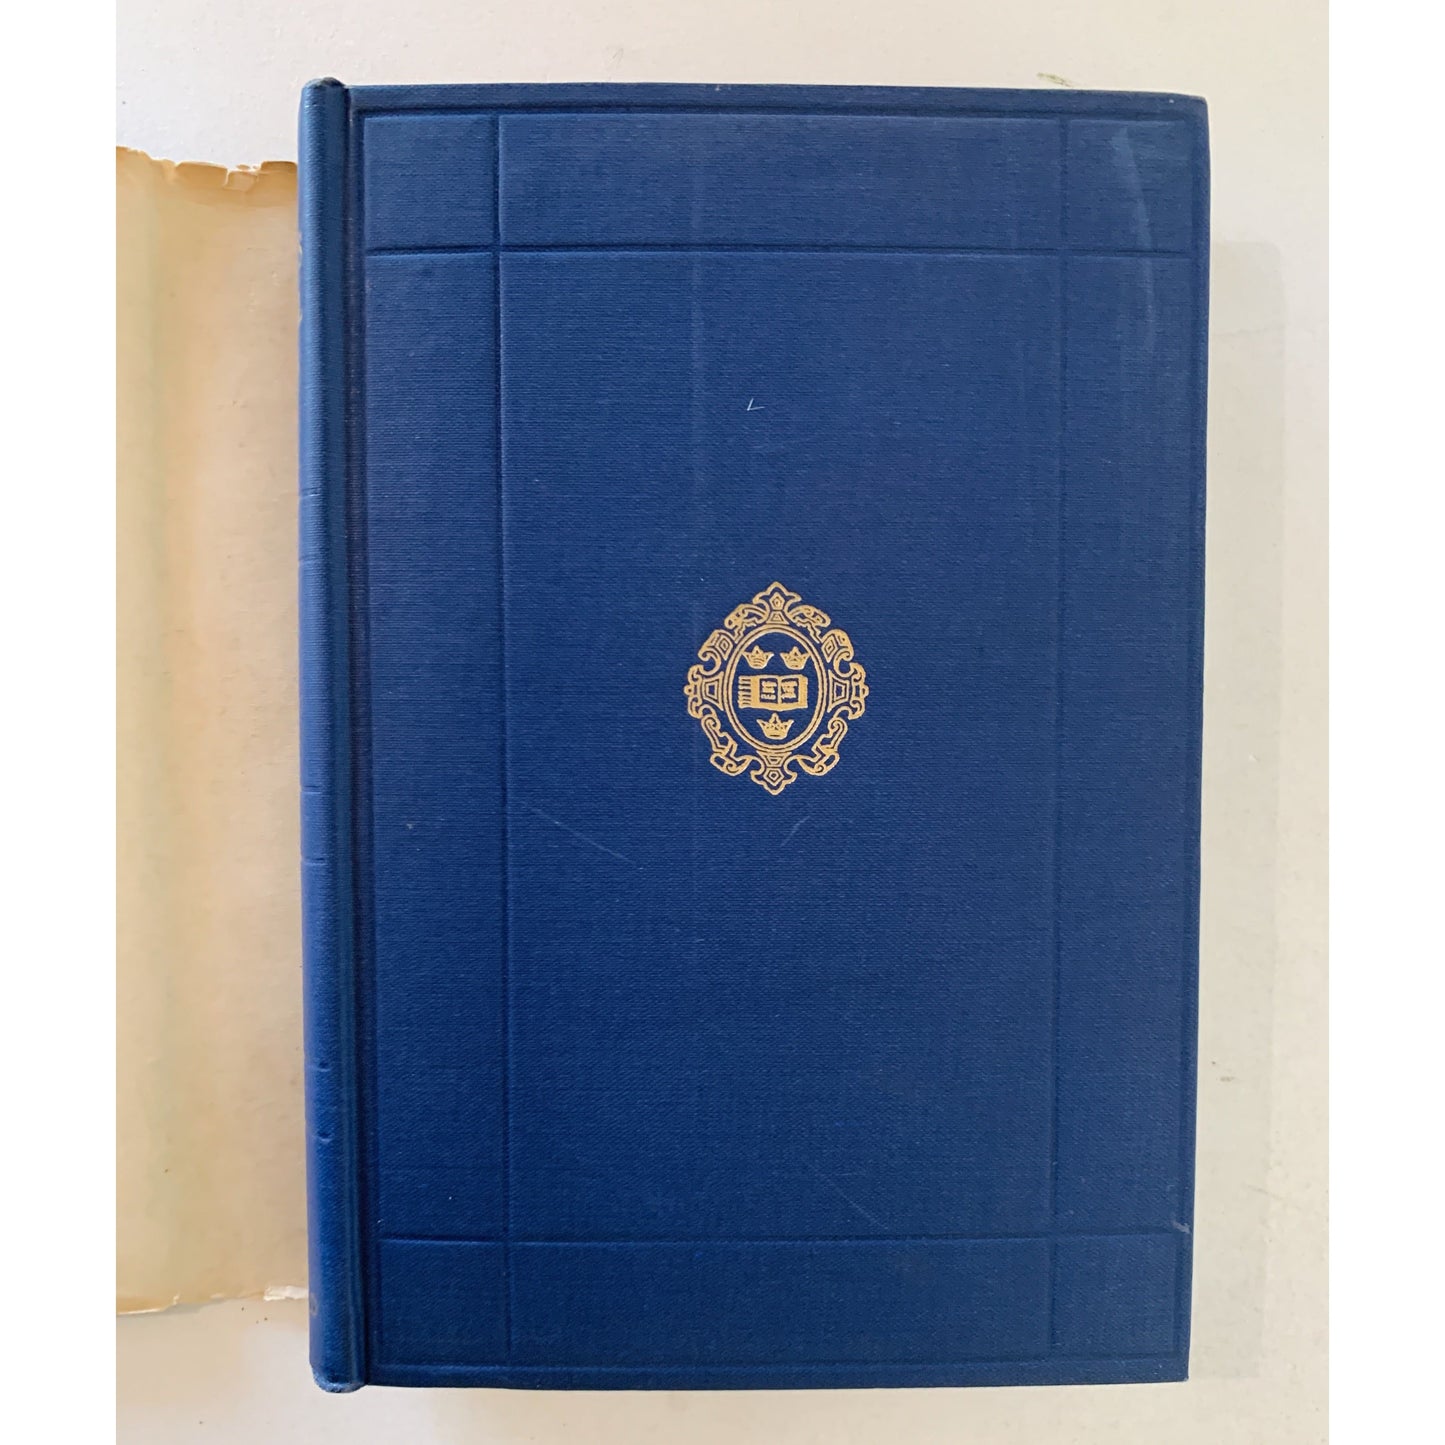 The Poems of John Milton, 1946, Oxford University Press